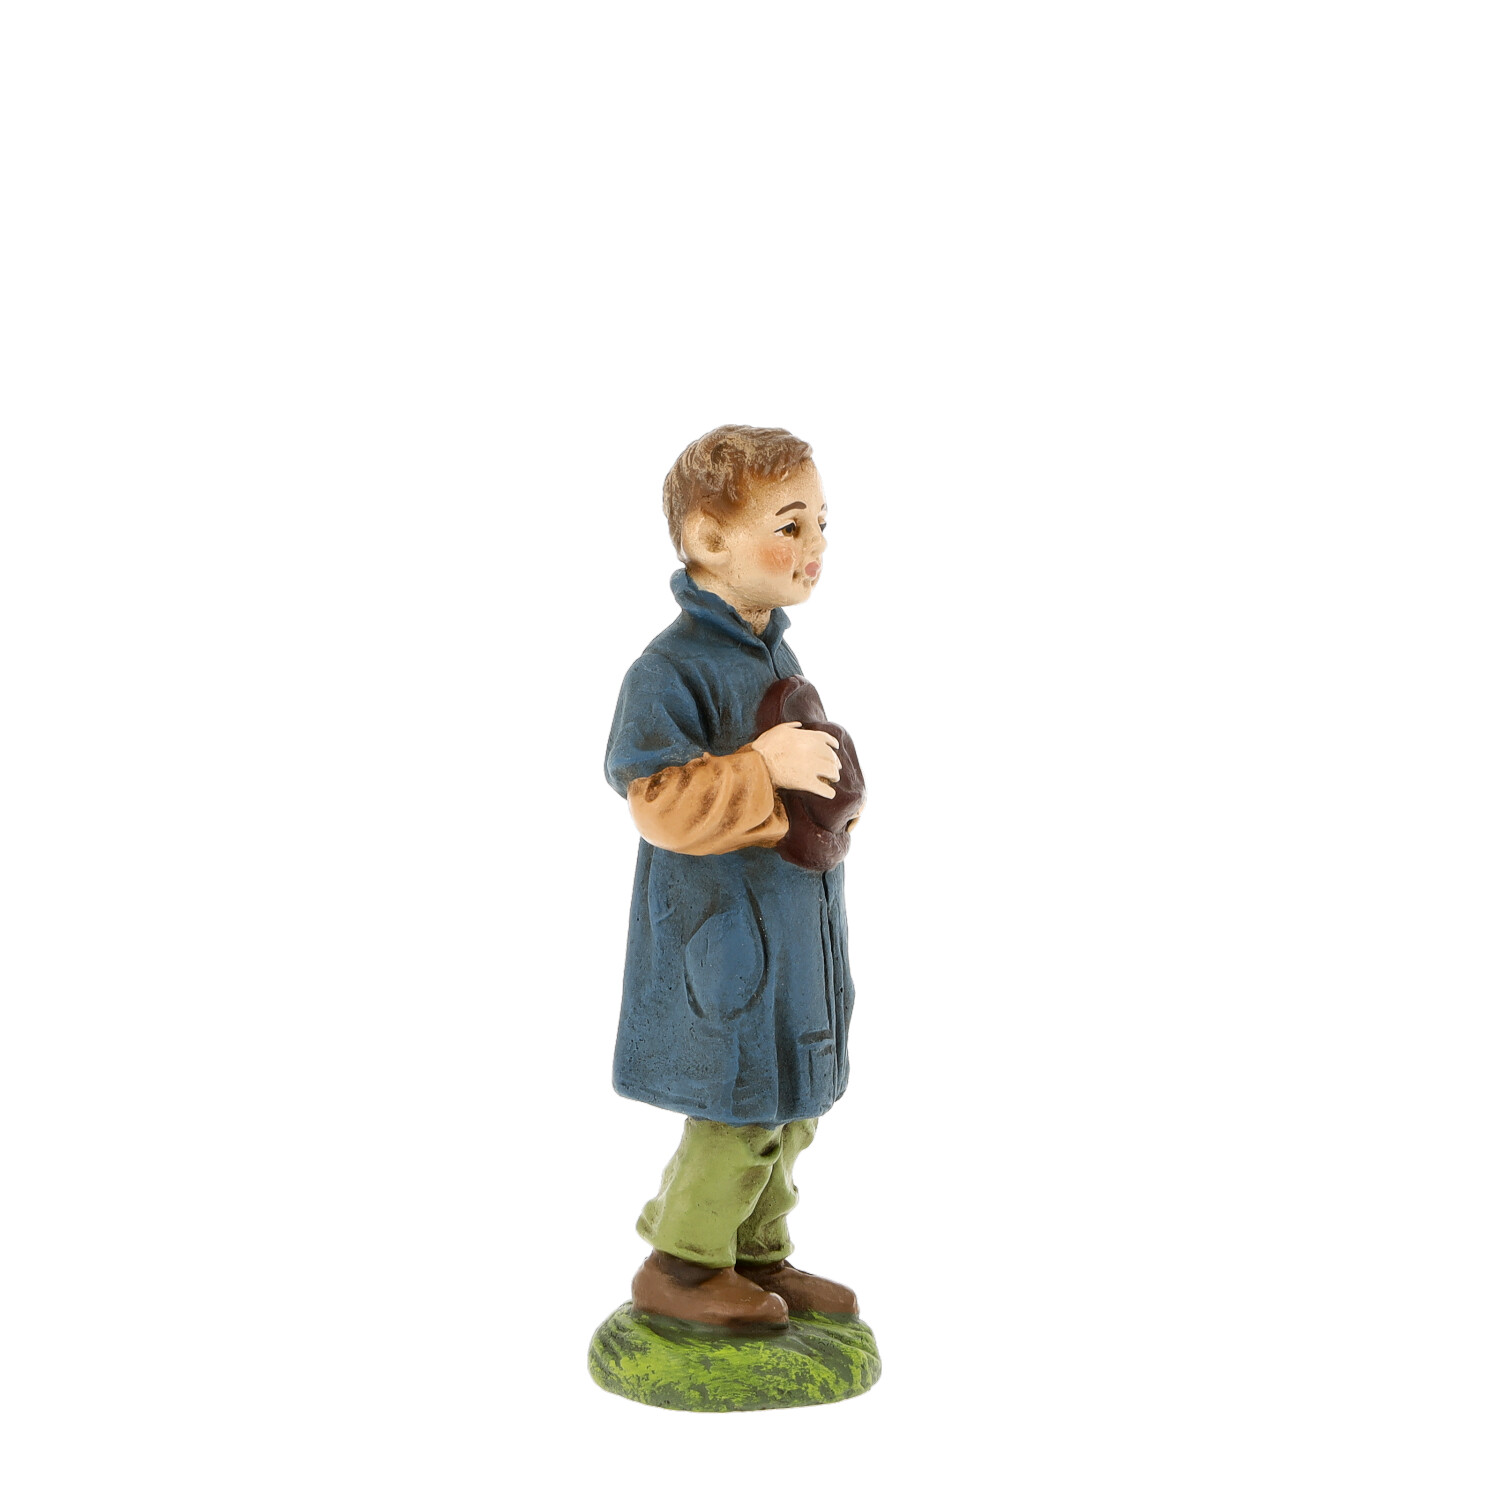 Shepherd boy with hat, to 6.75 in. figures - Marolin Nativity figure - made in Germany